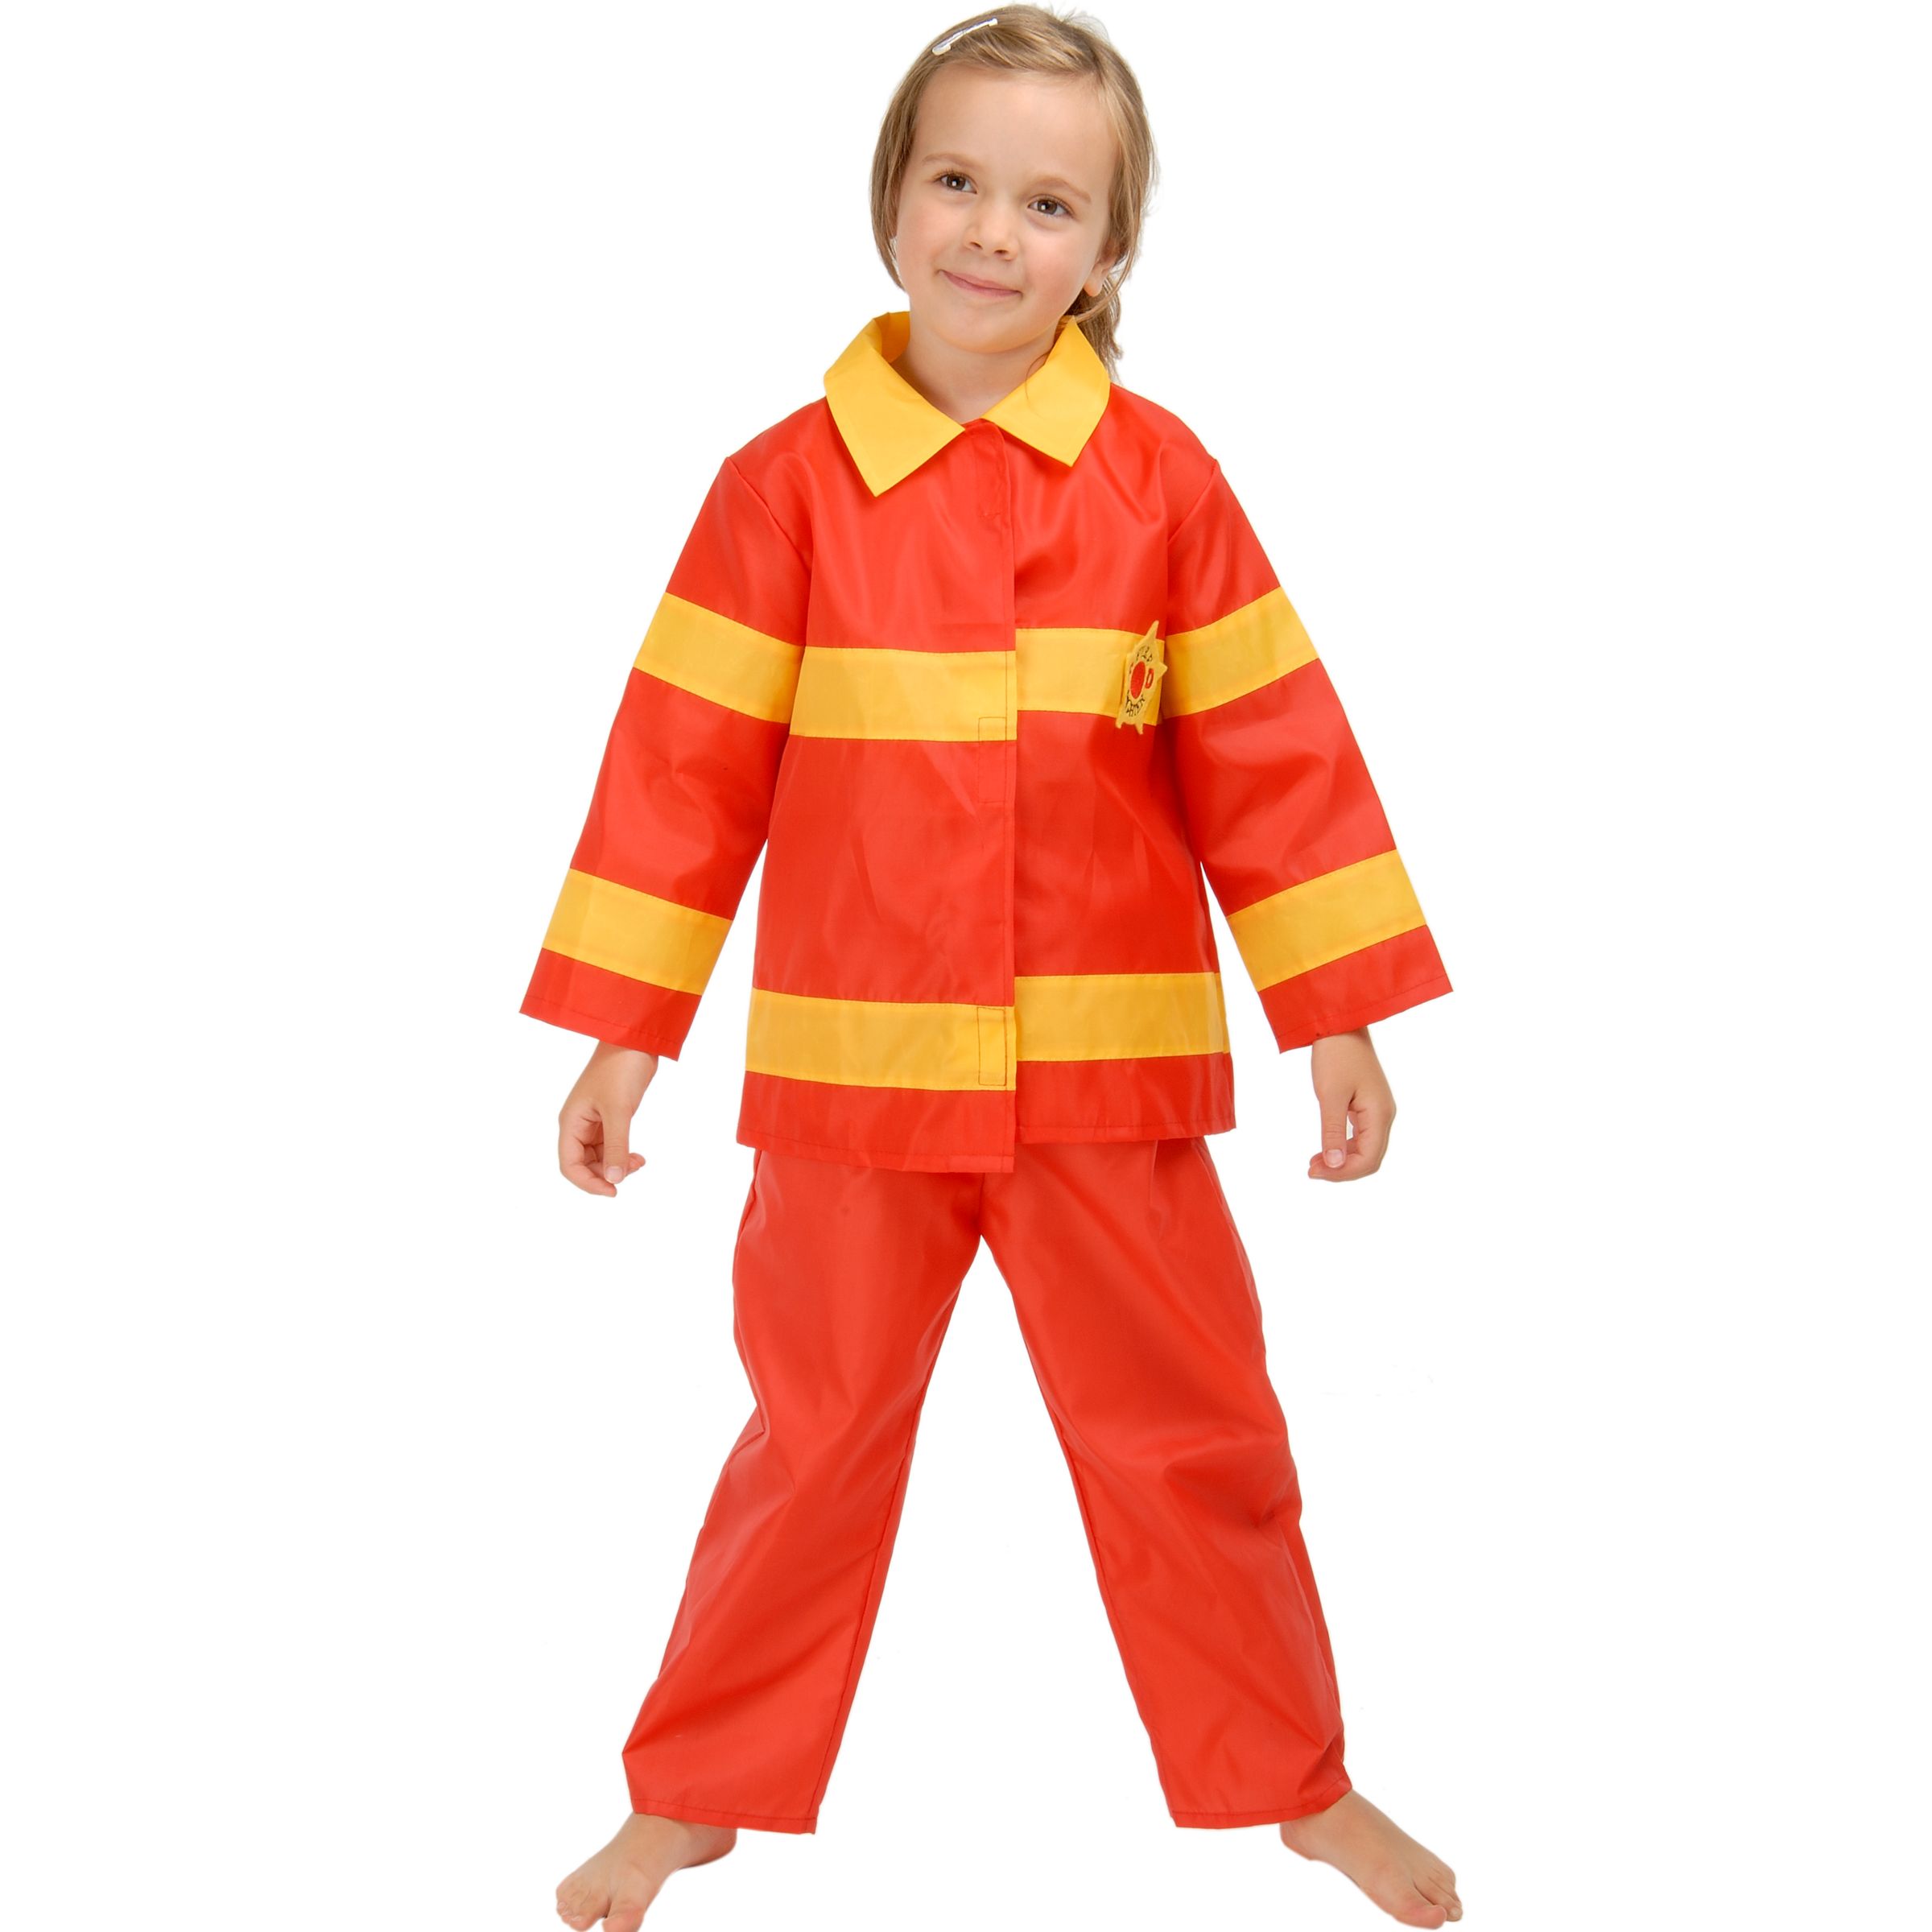 John Lewis Fireman Outfit, 3-5 years